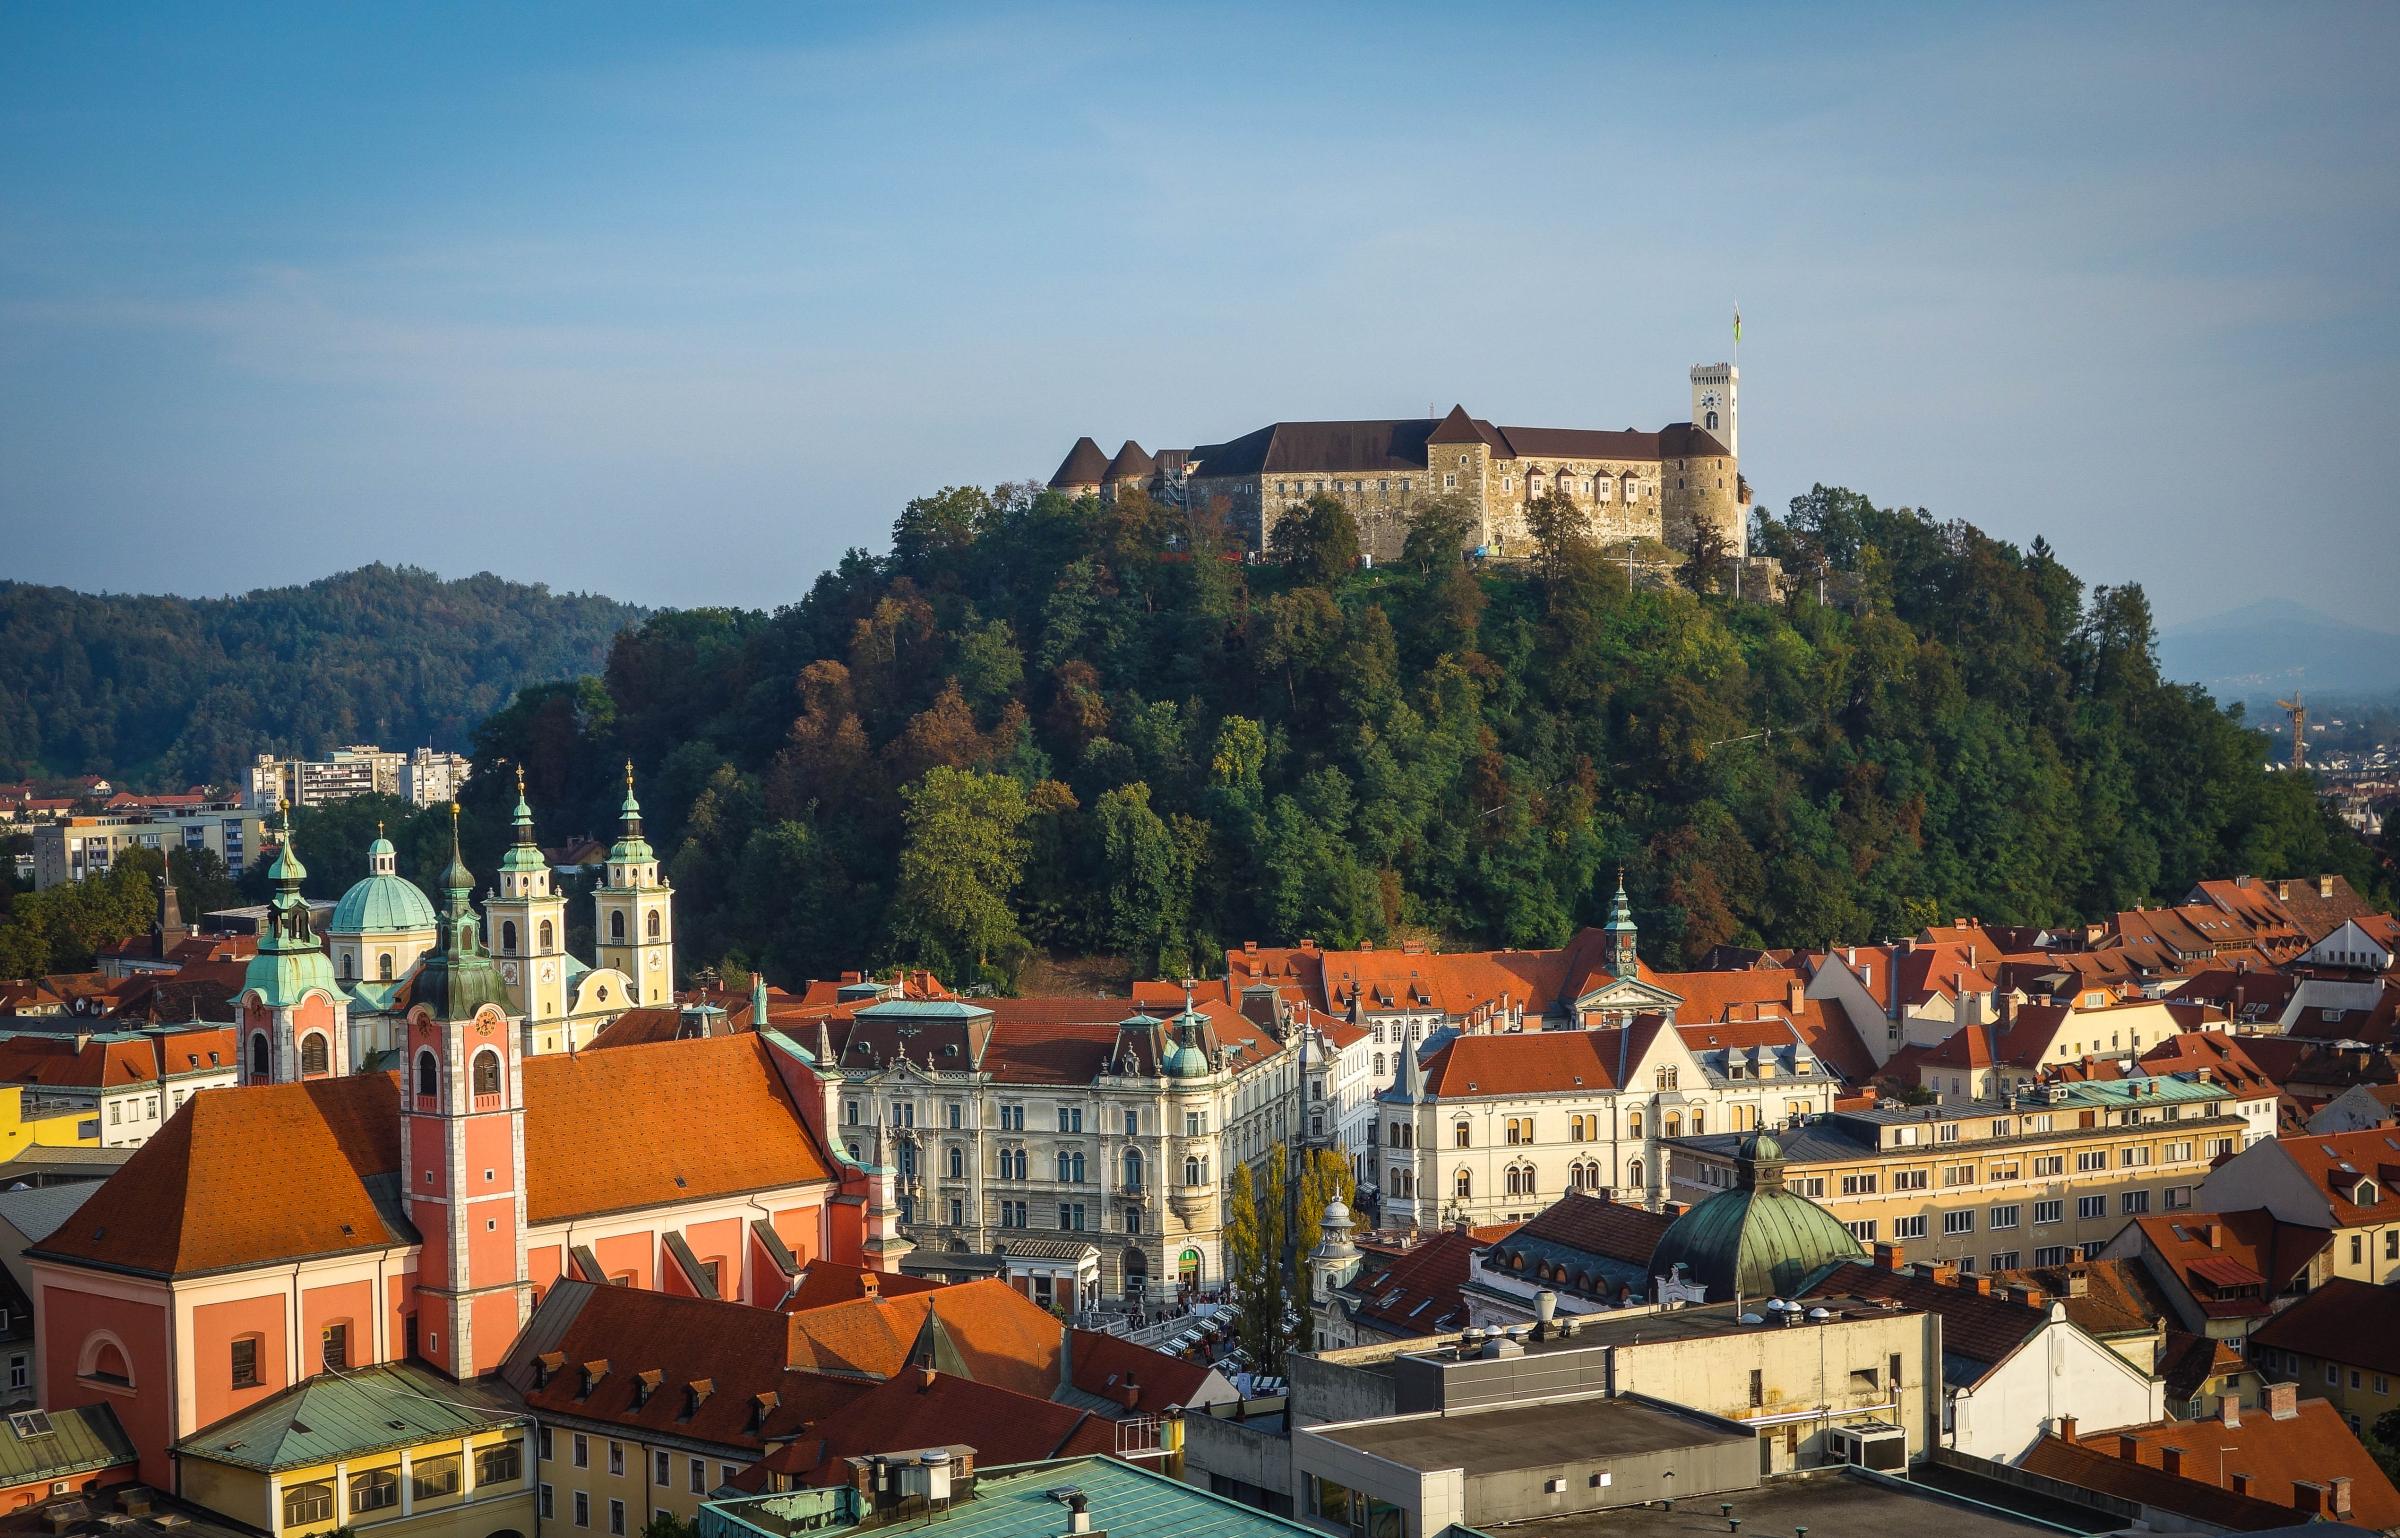 Slovenia, Ljubljana, Castle on wooded hill and surrounding cityscape